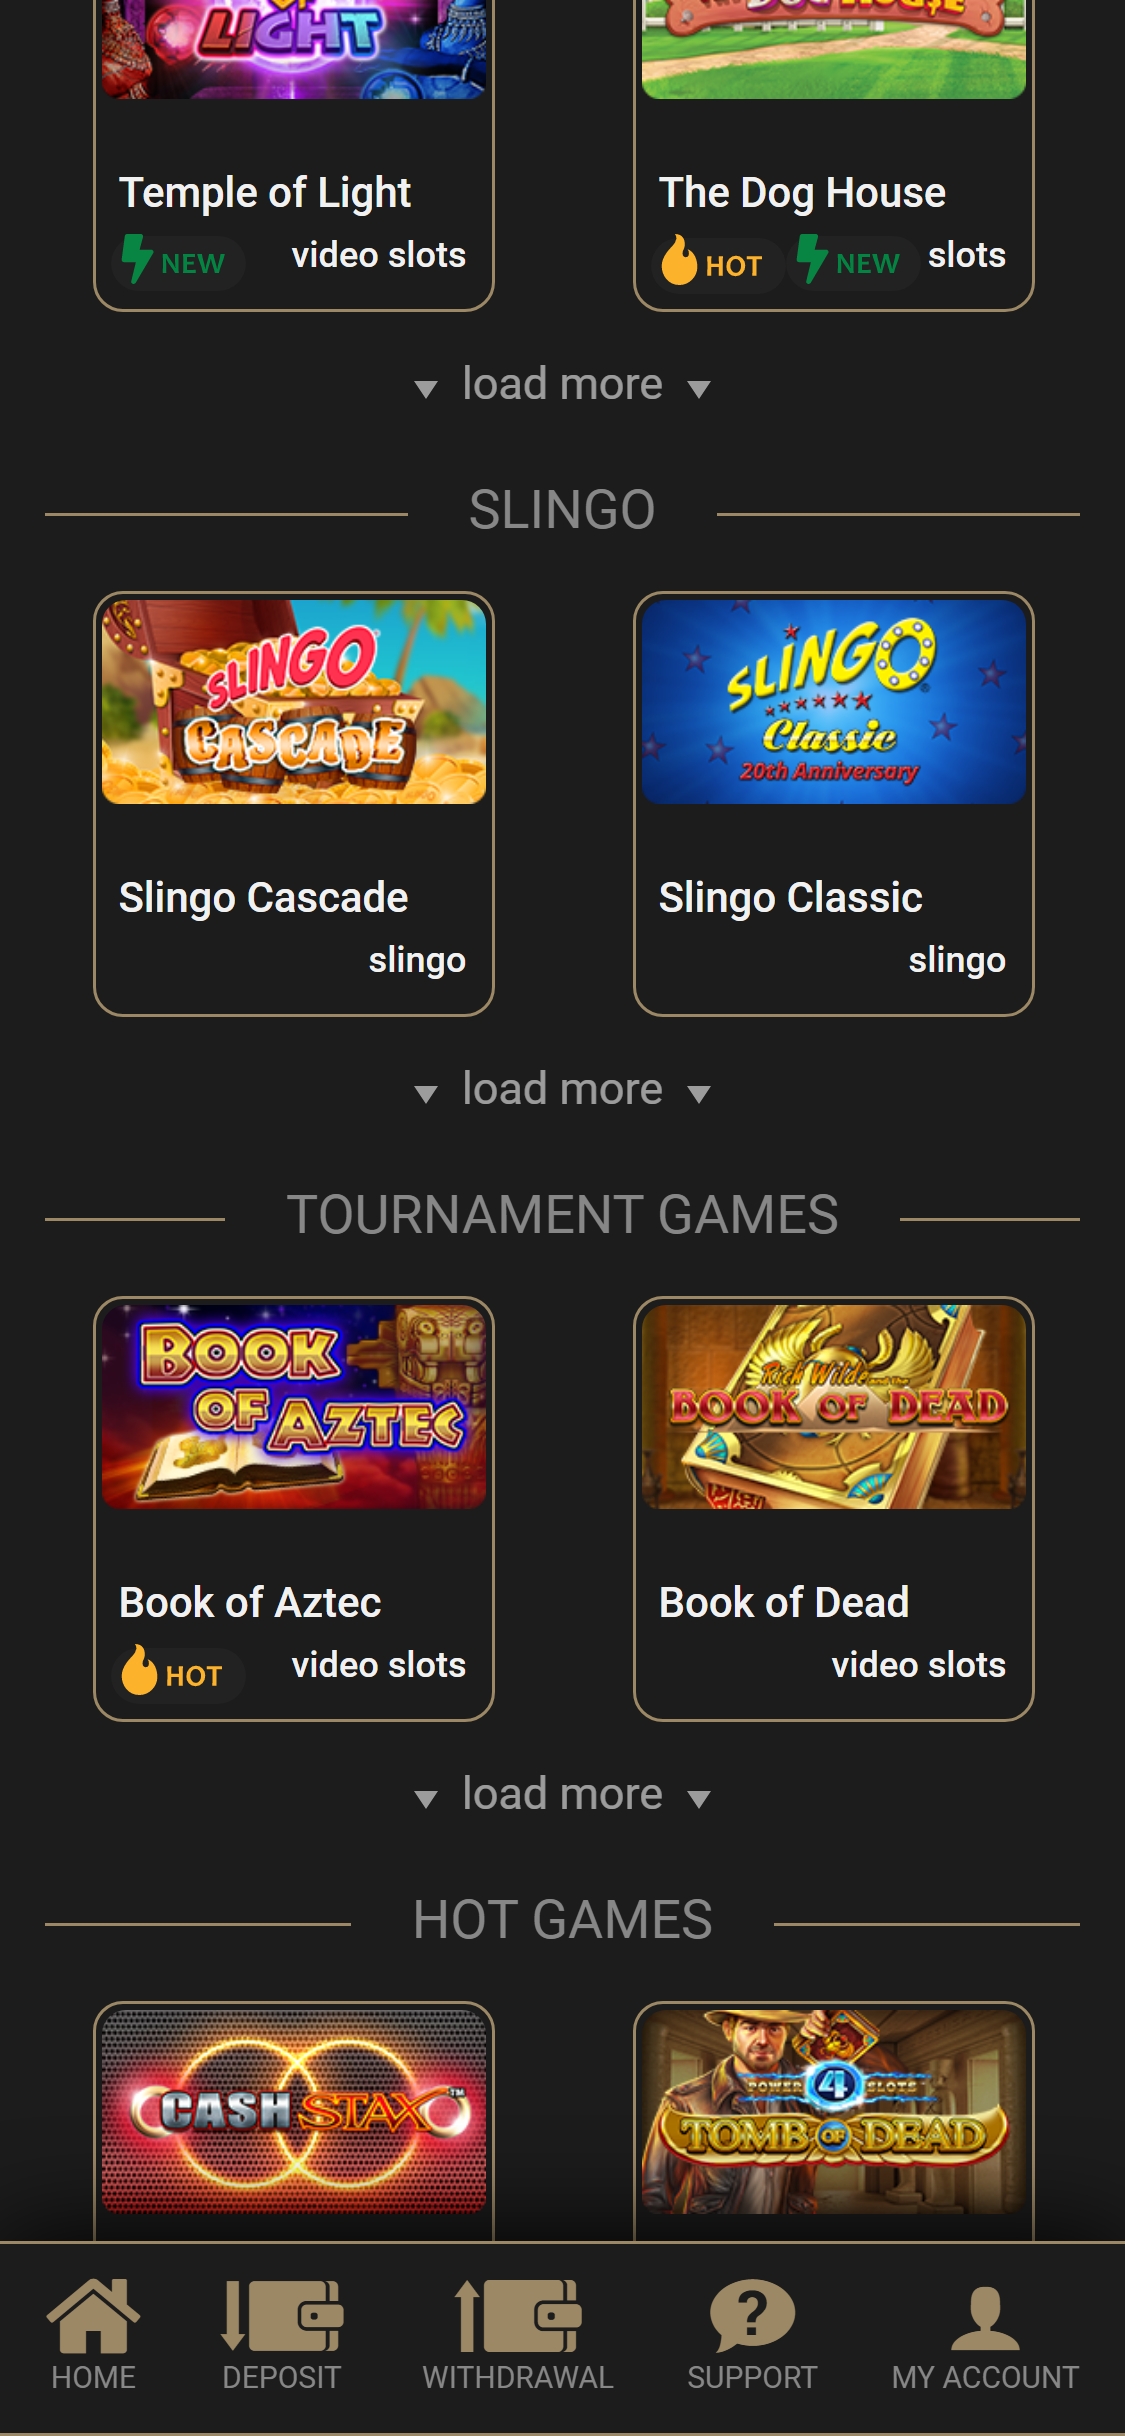 Casino Casino Mobile Games Review